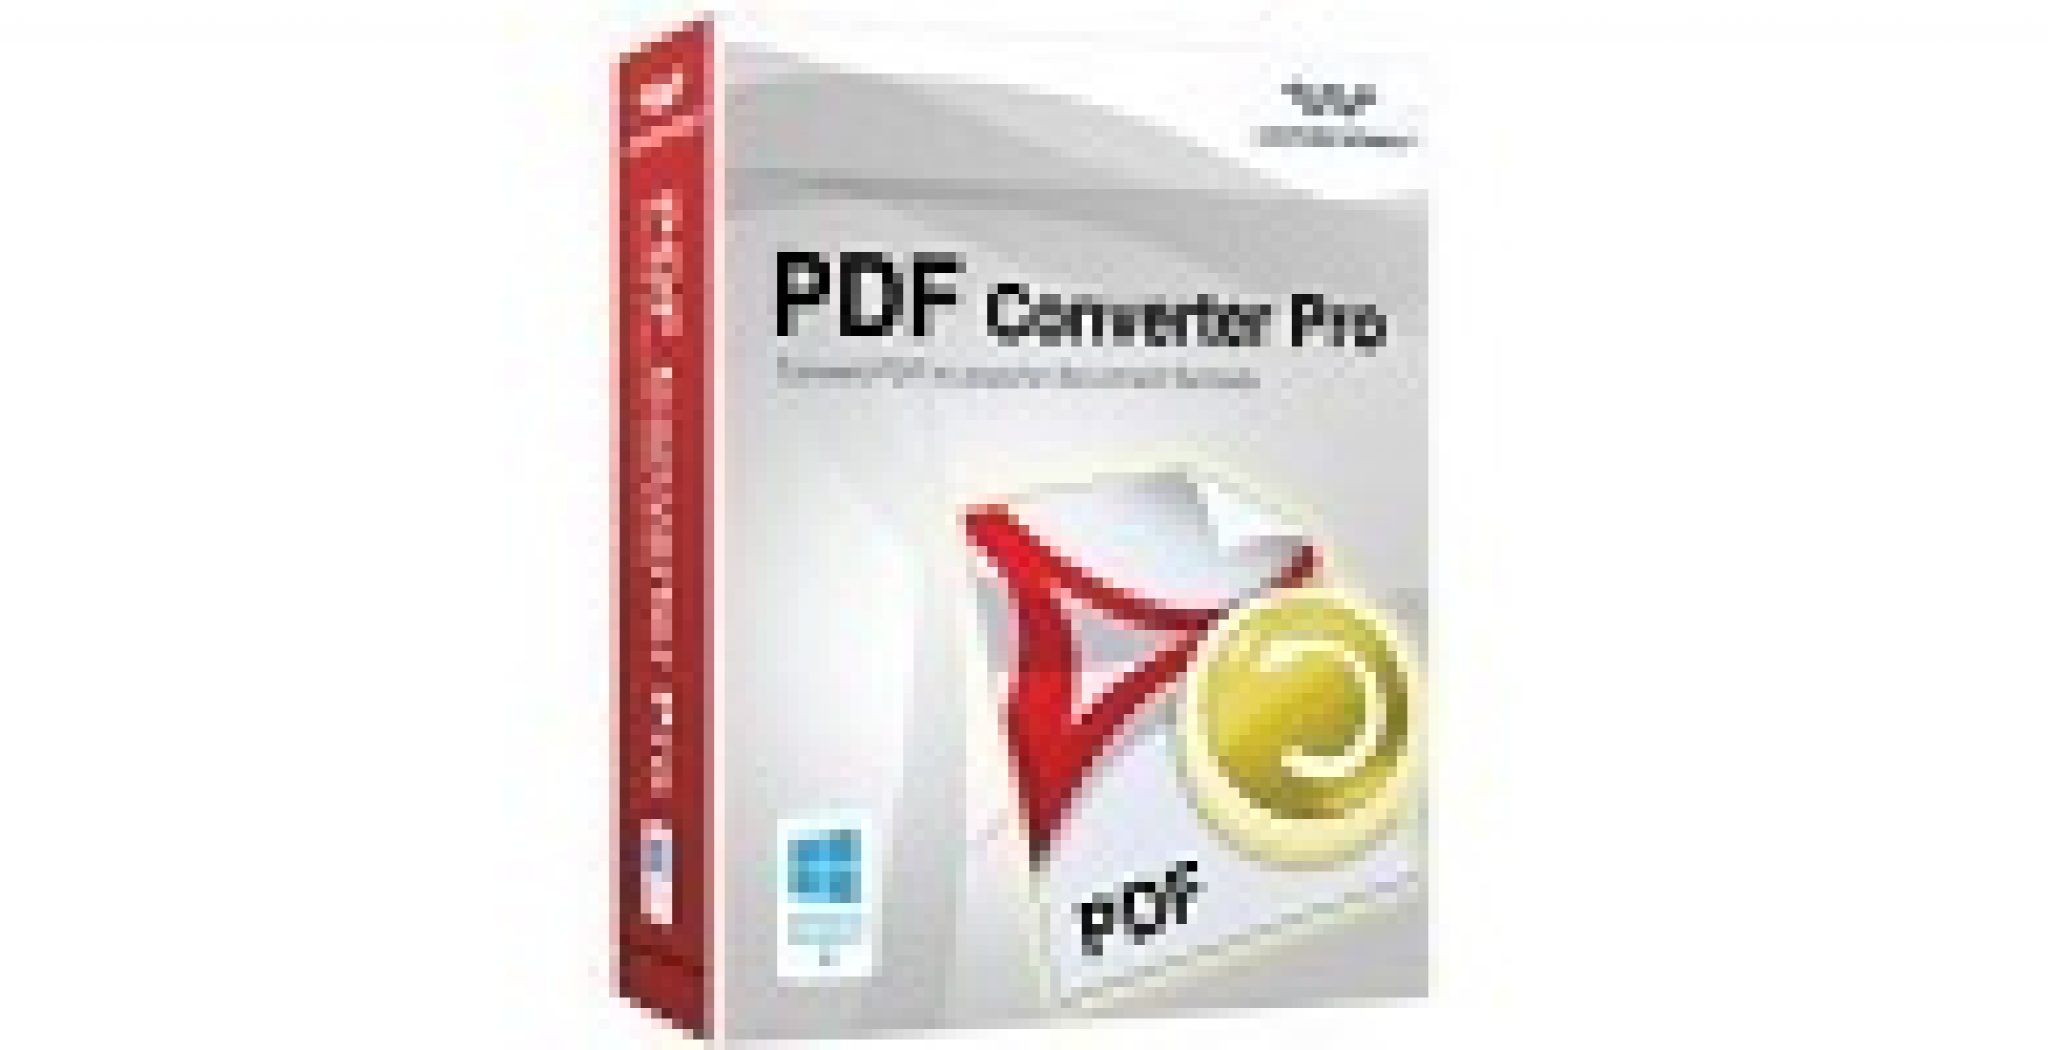 wondershare pdf converter pro 4.0.5 crack